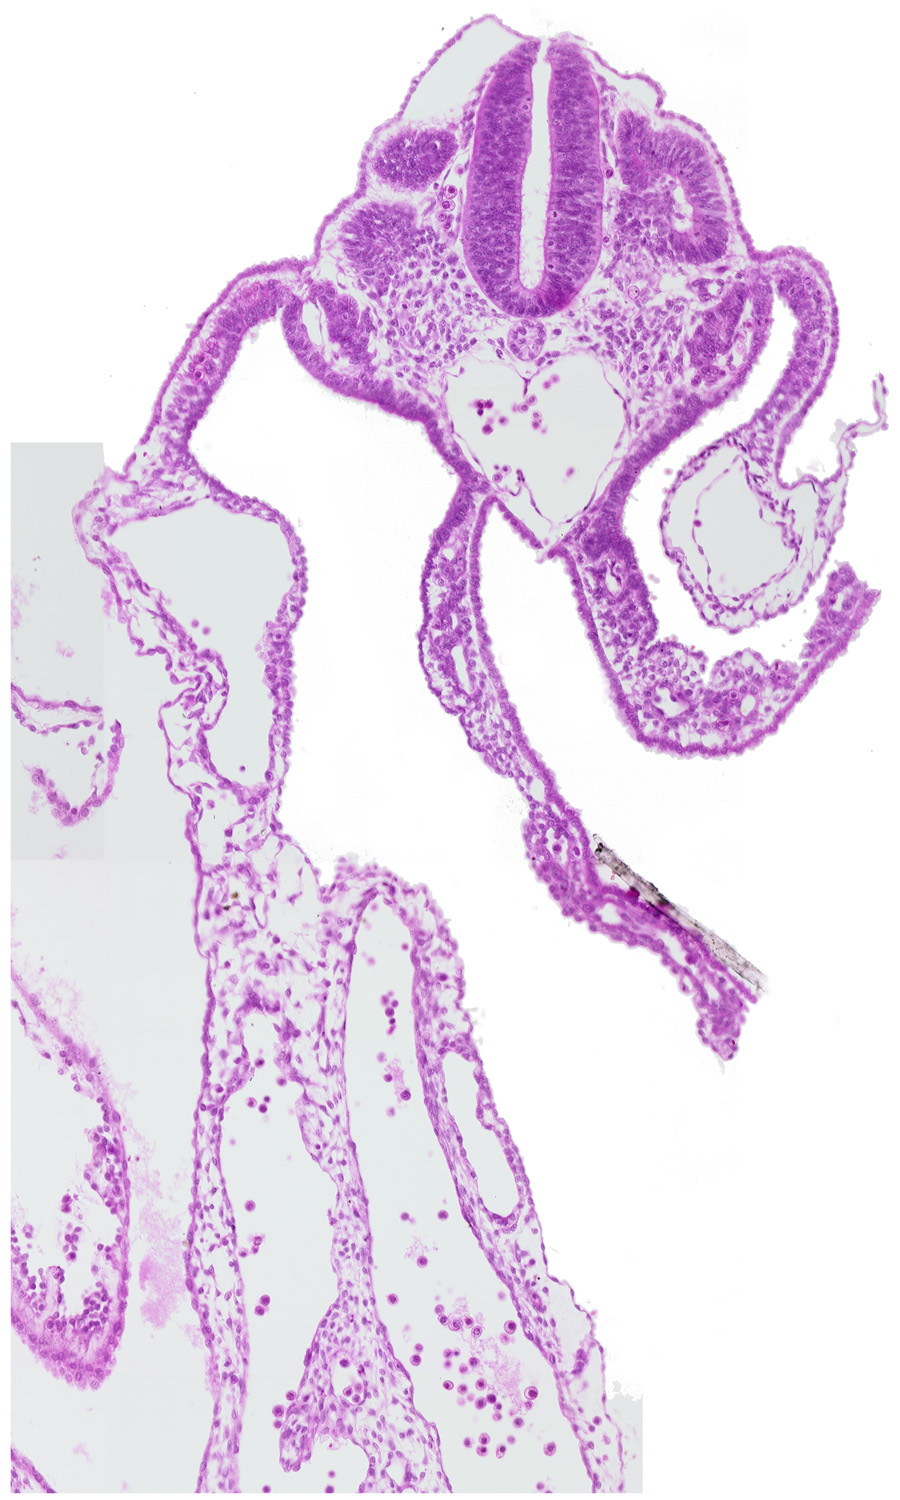 aorta, common umbilical artery, dermatomyotome 11 (C-7), left umbilical vein, right umbilical vein